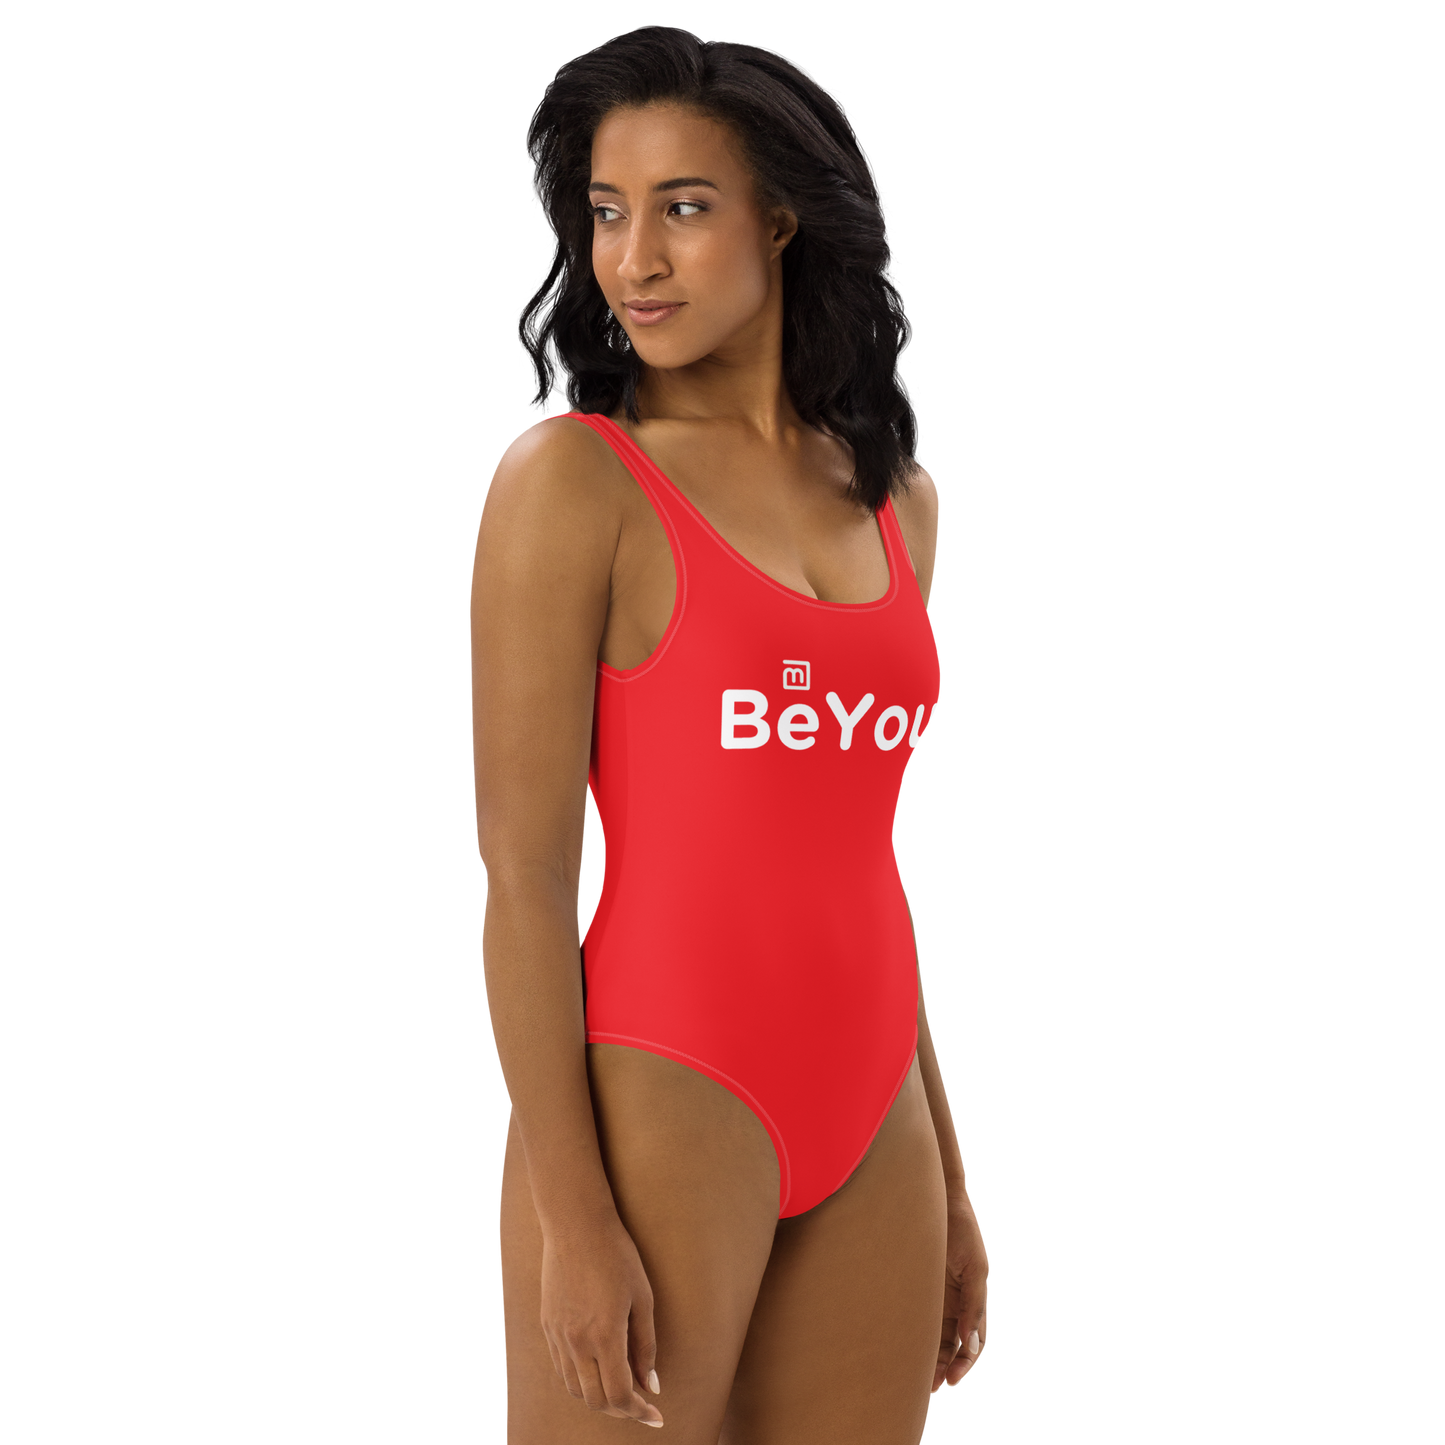 Alizarin Red One-Piece Body Shaper BeYou Performance Swimsuit